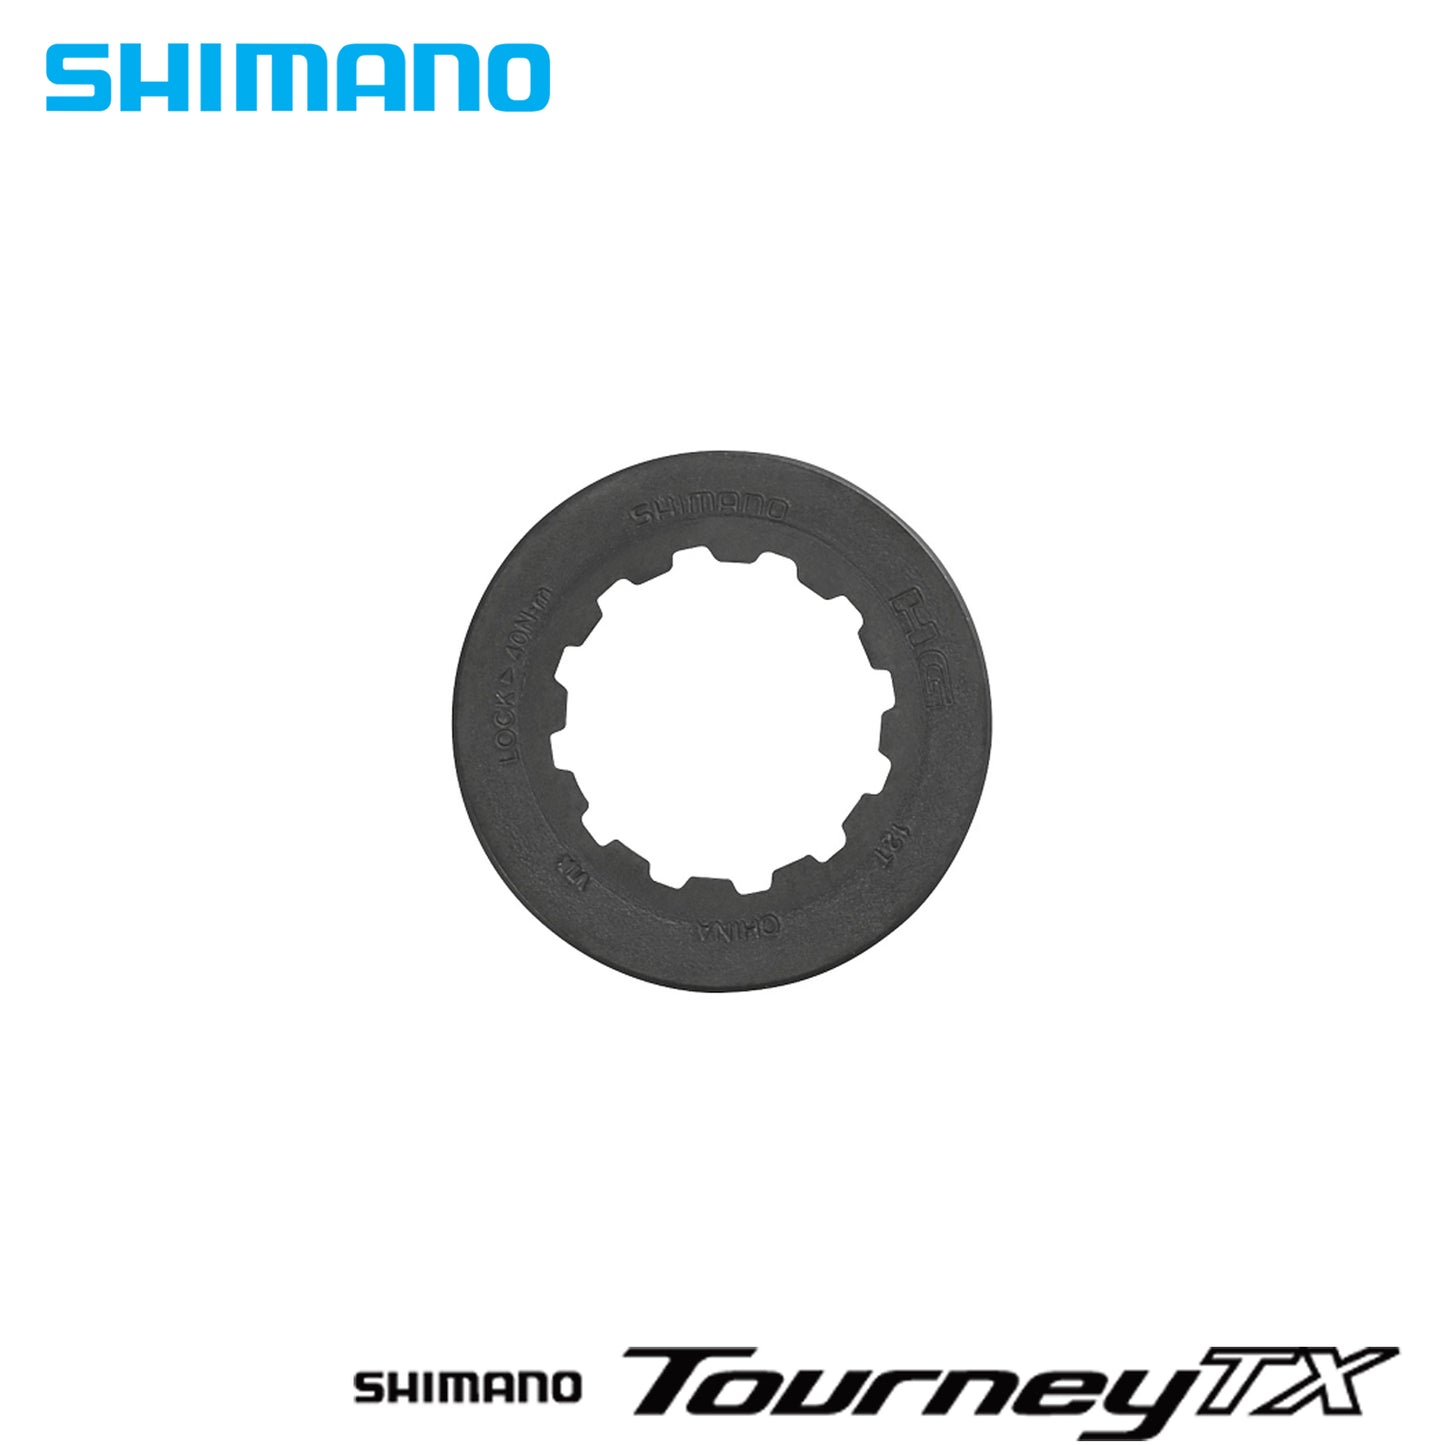 Shimano Tourney TX CS-HG200-8 12-32 8-Speed HG Cassette Sprocket